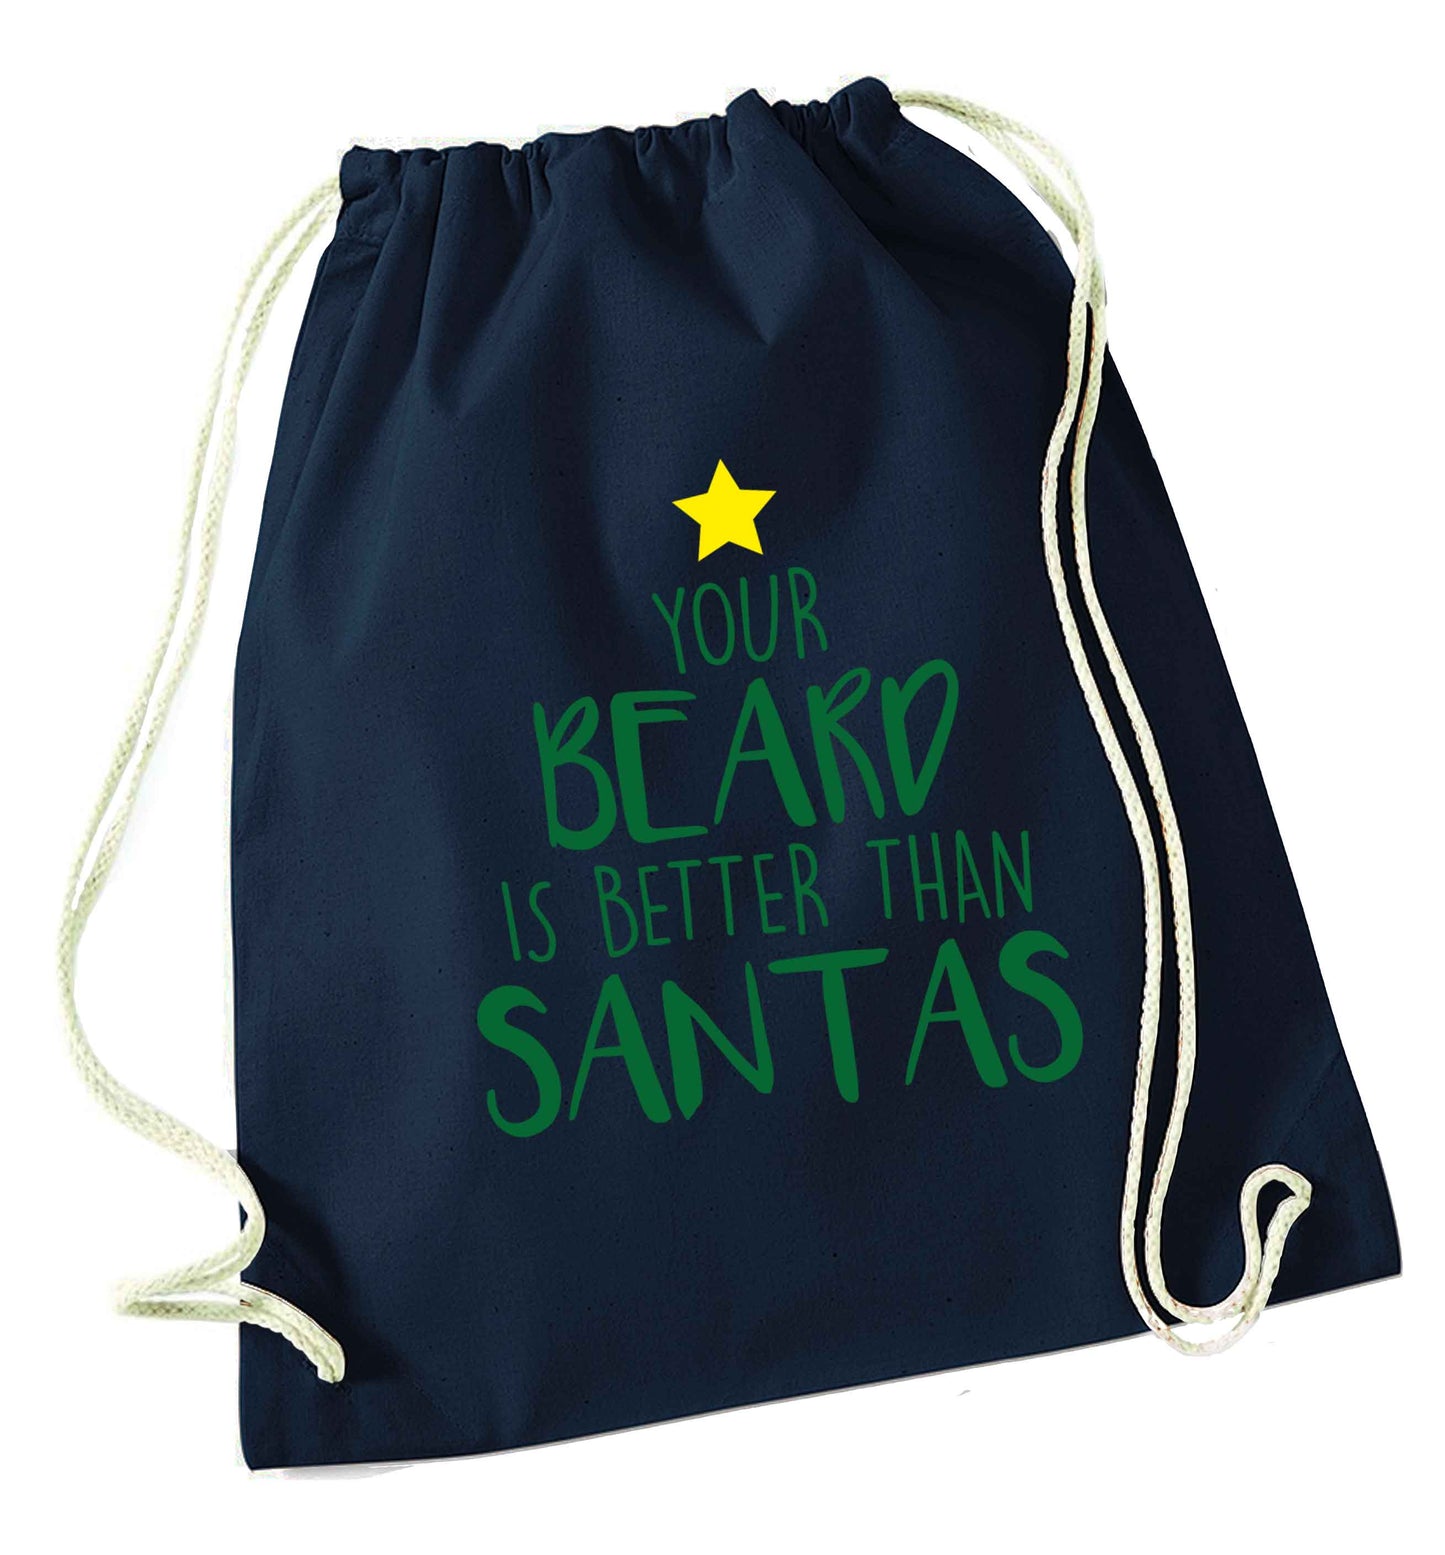 Your Beard Better than Santas navy drawstring bag